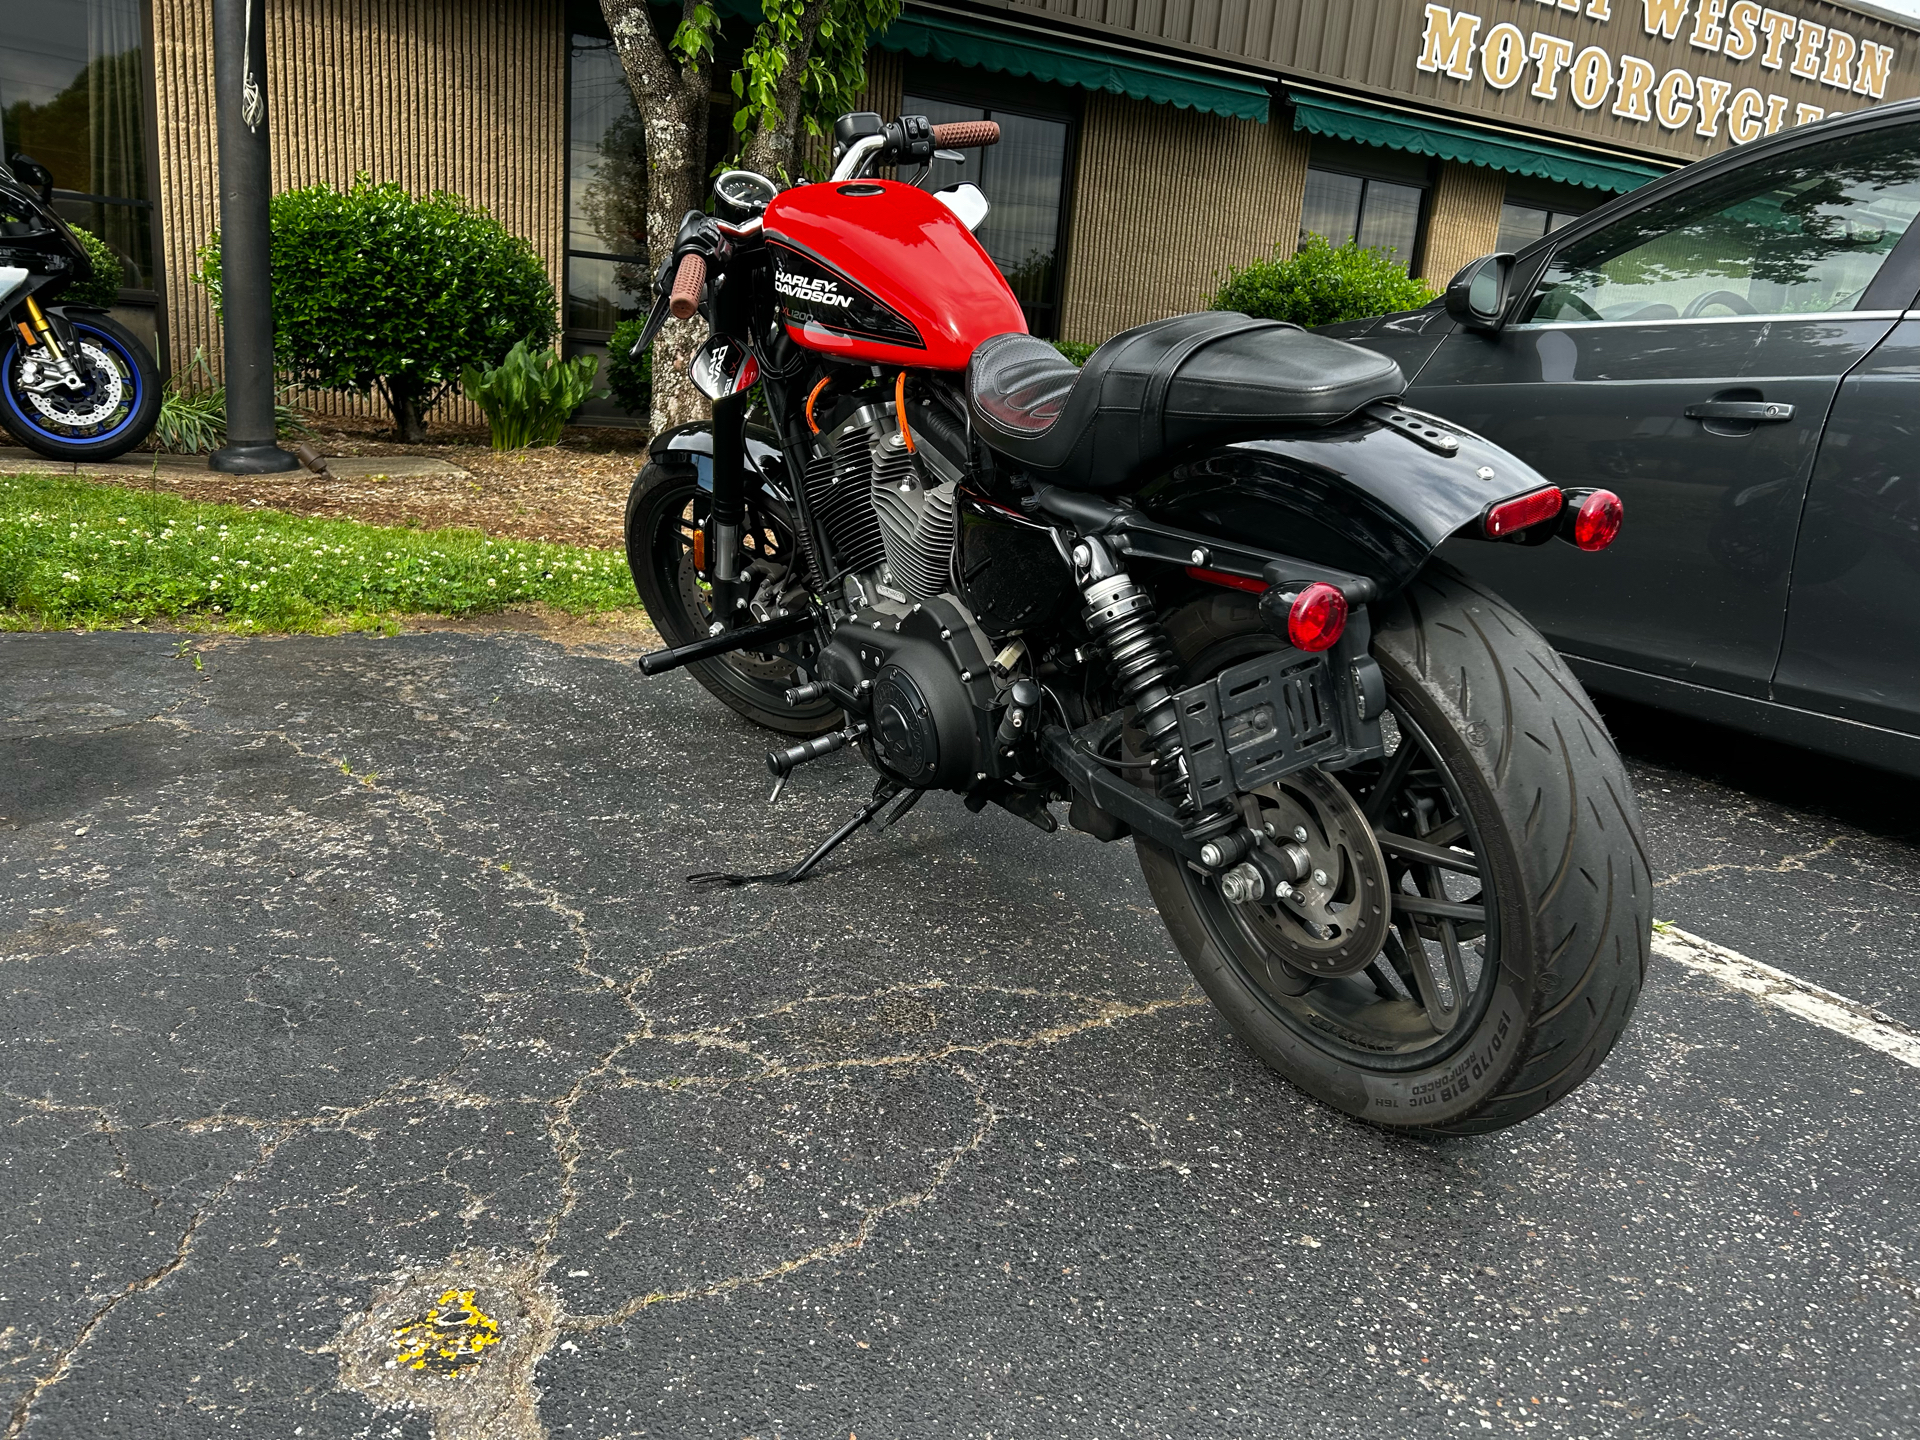 2020 Harley-Davidson Roadster™ in Statesville, North Carolina - Photo 5